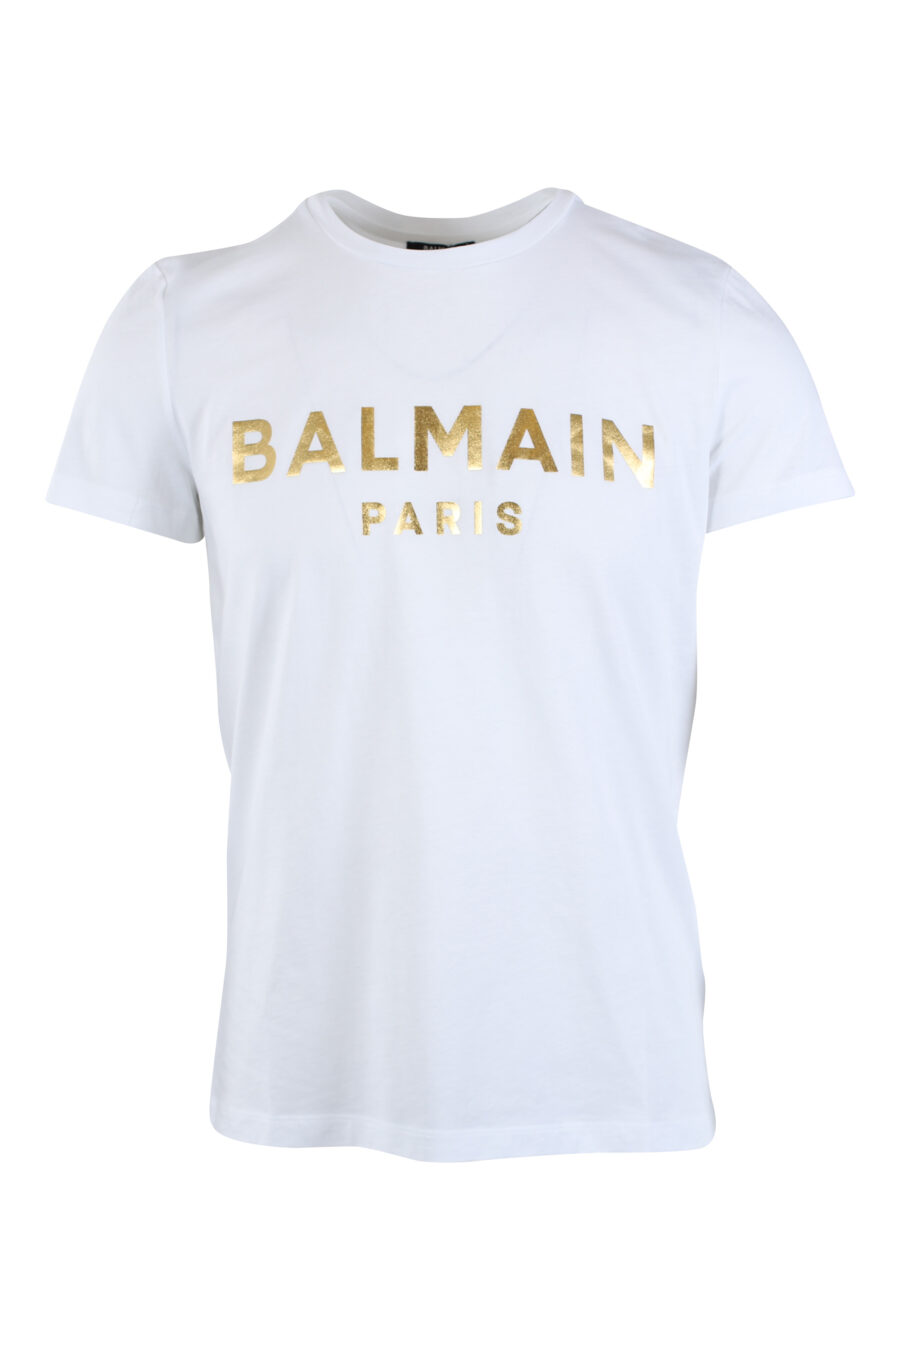 Weißes T-Shirt mit goldenem Maxilogo "paris" - IMG 2611 1